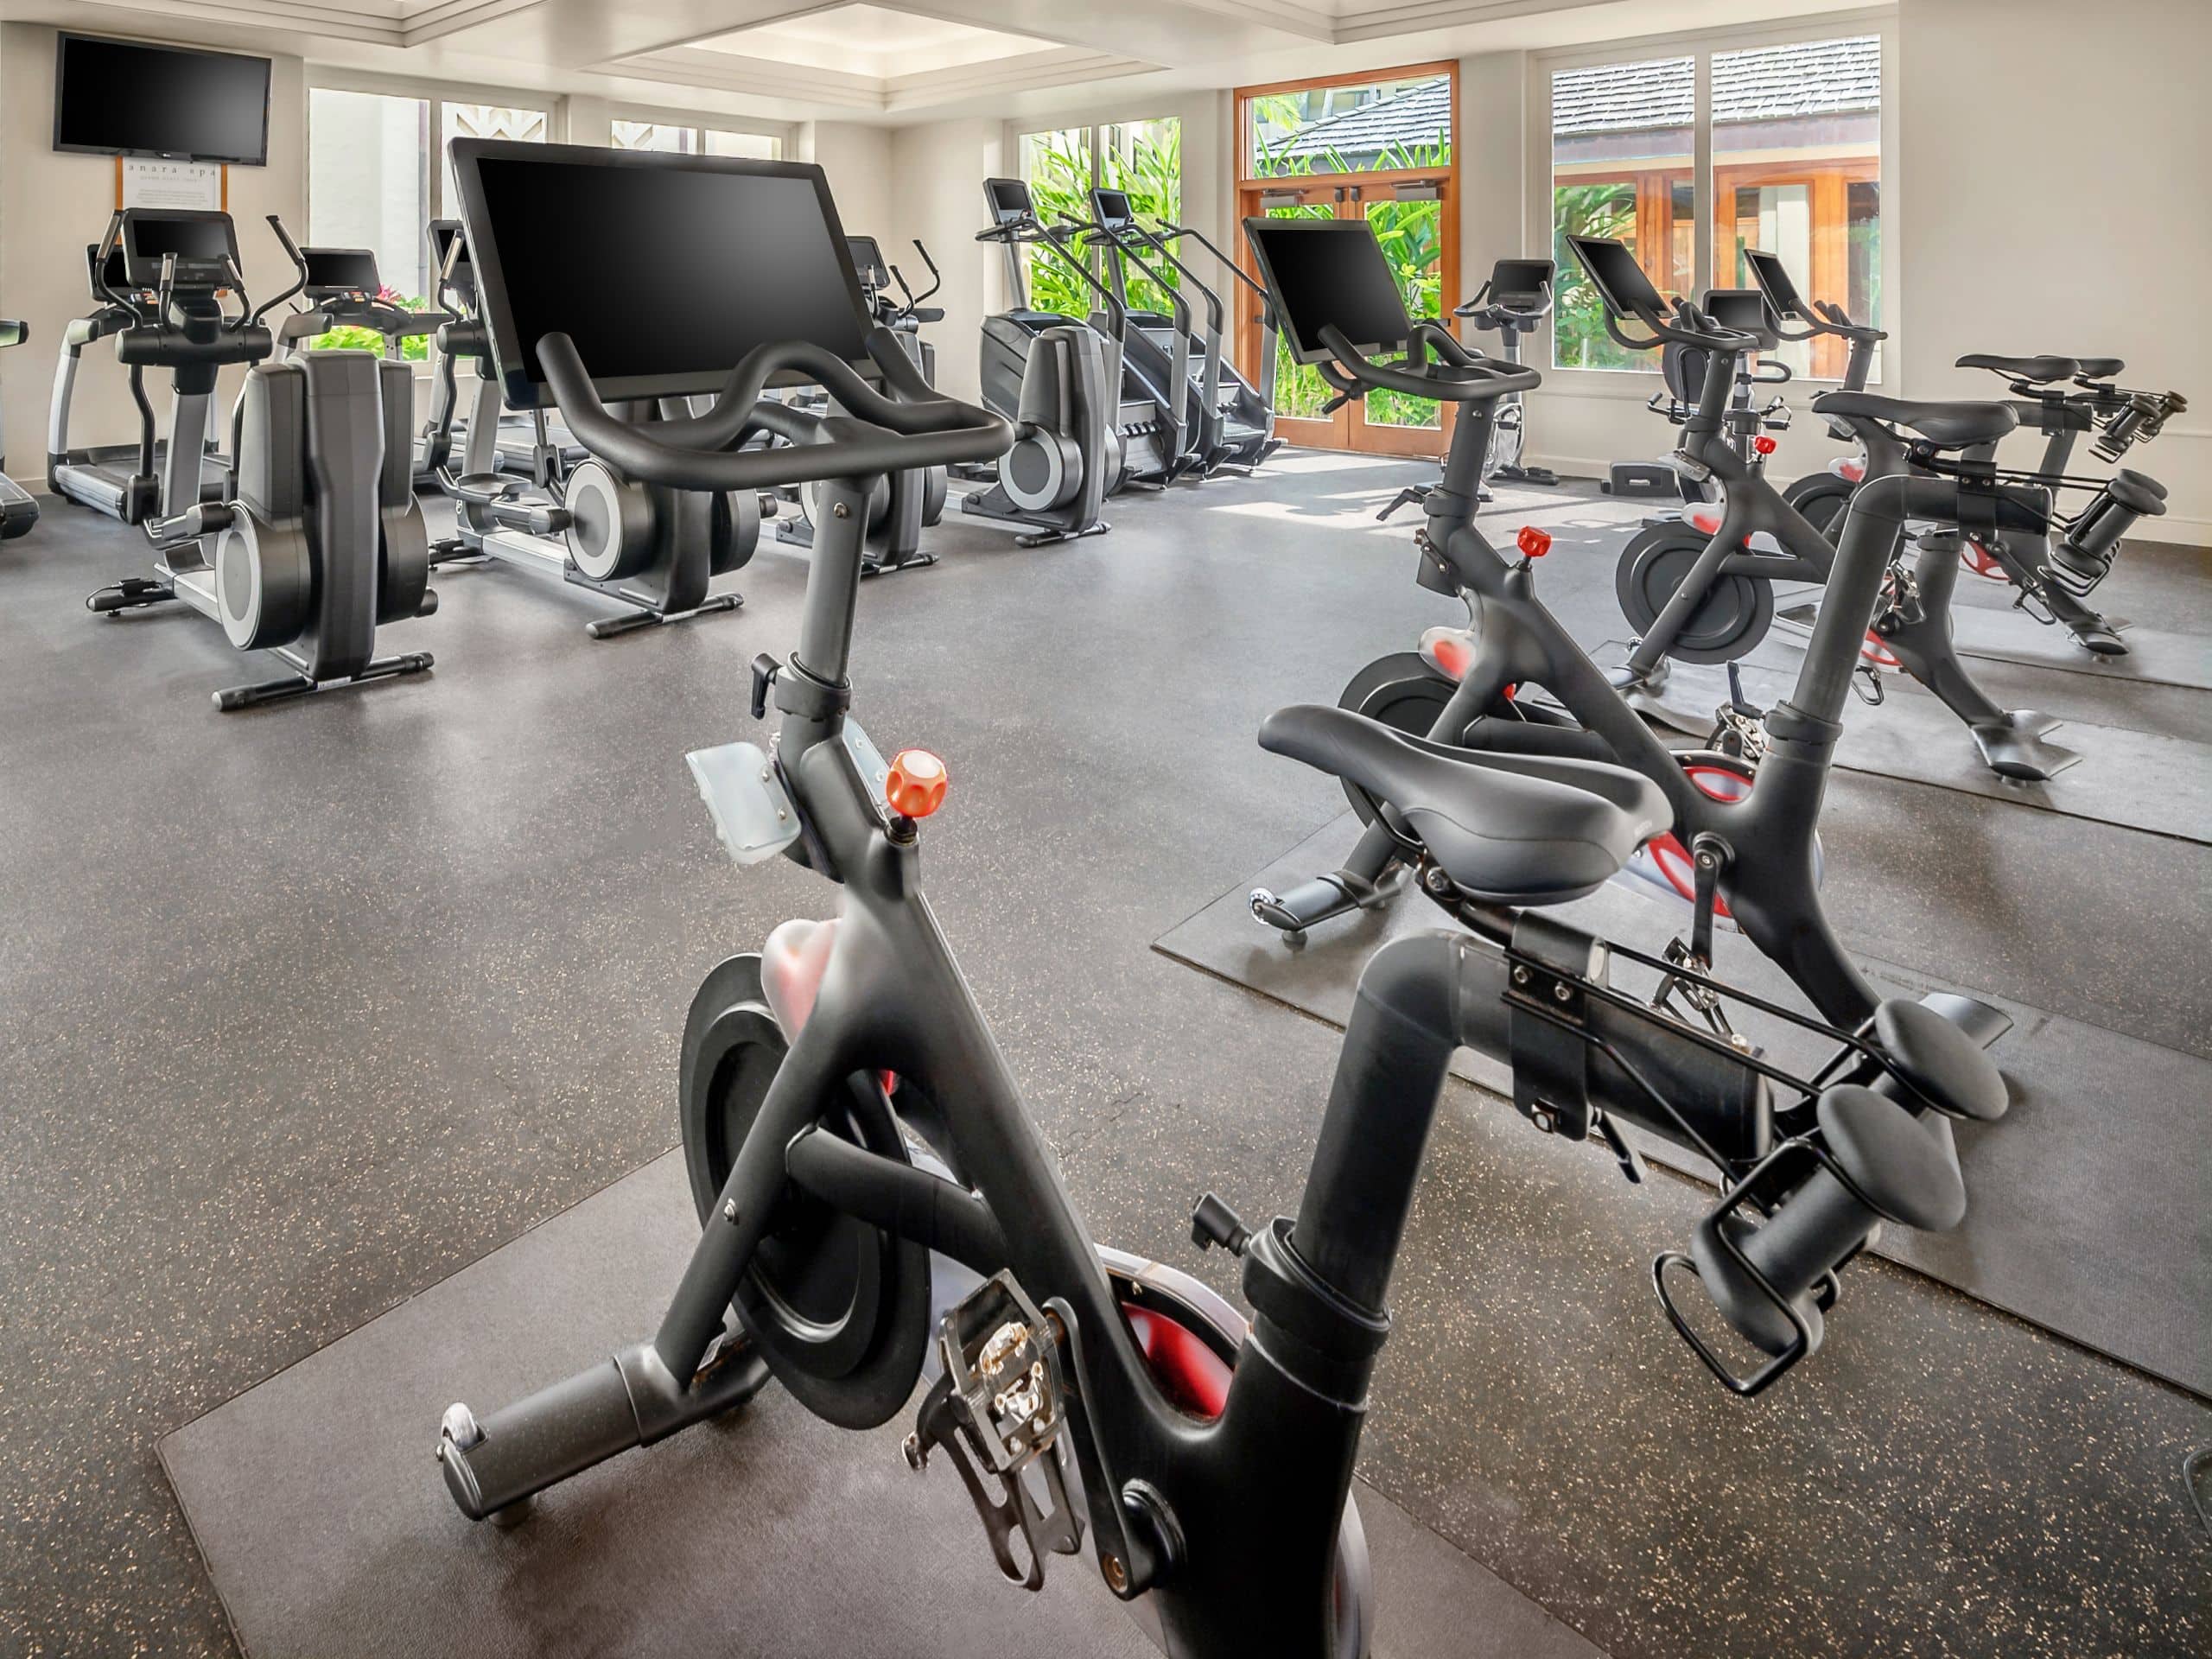 Anara Spa Fitness Cardio Room at Grand Hyatt Kauai